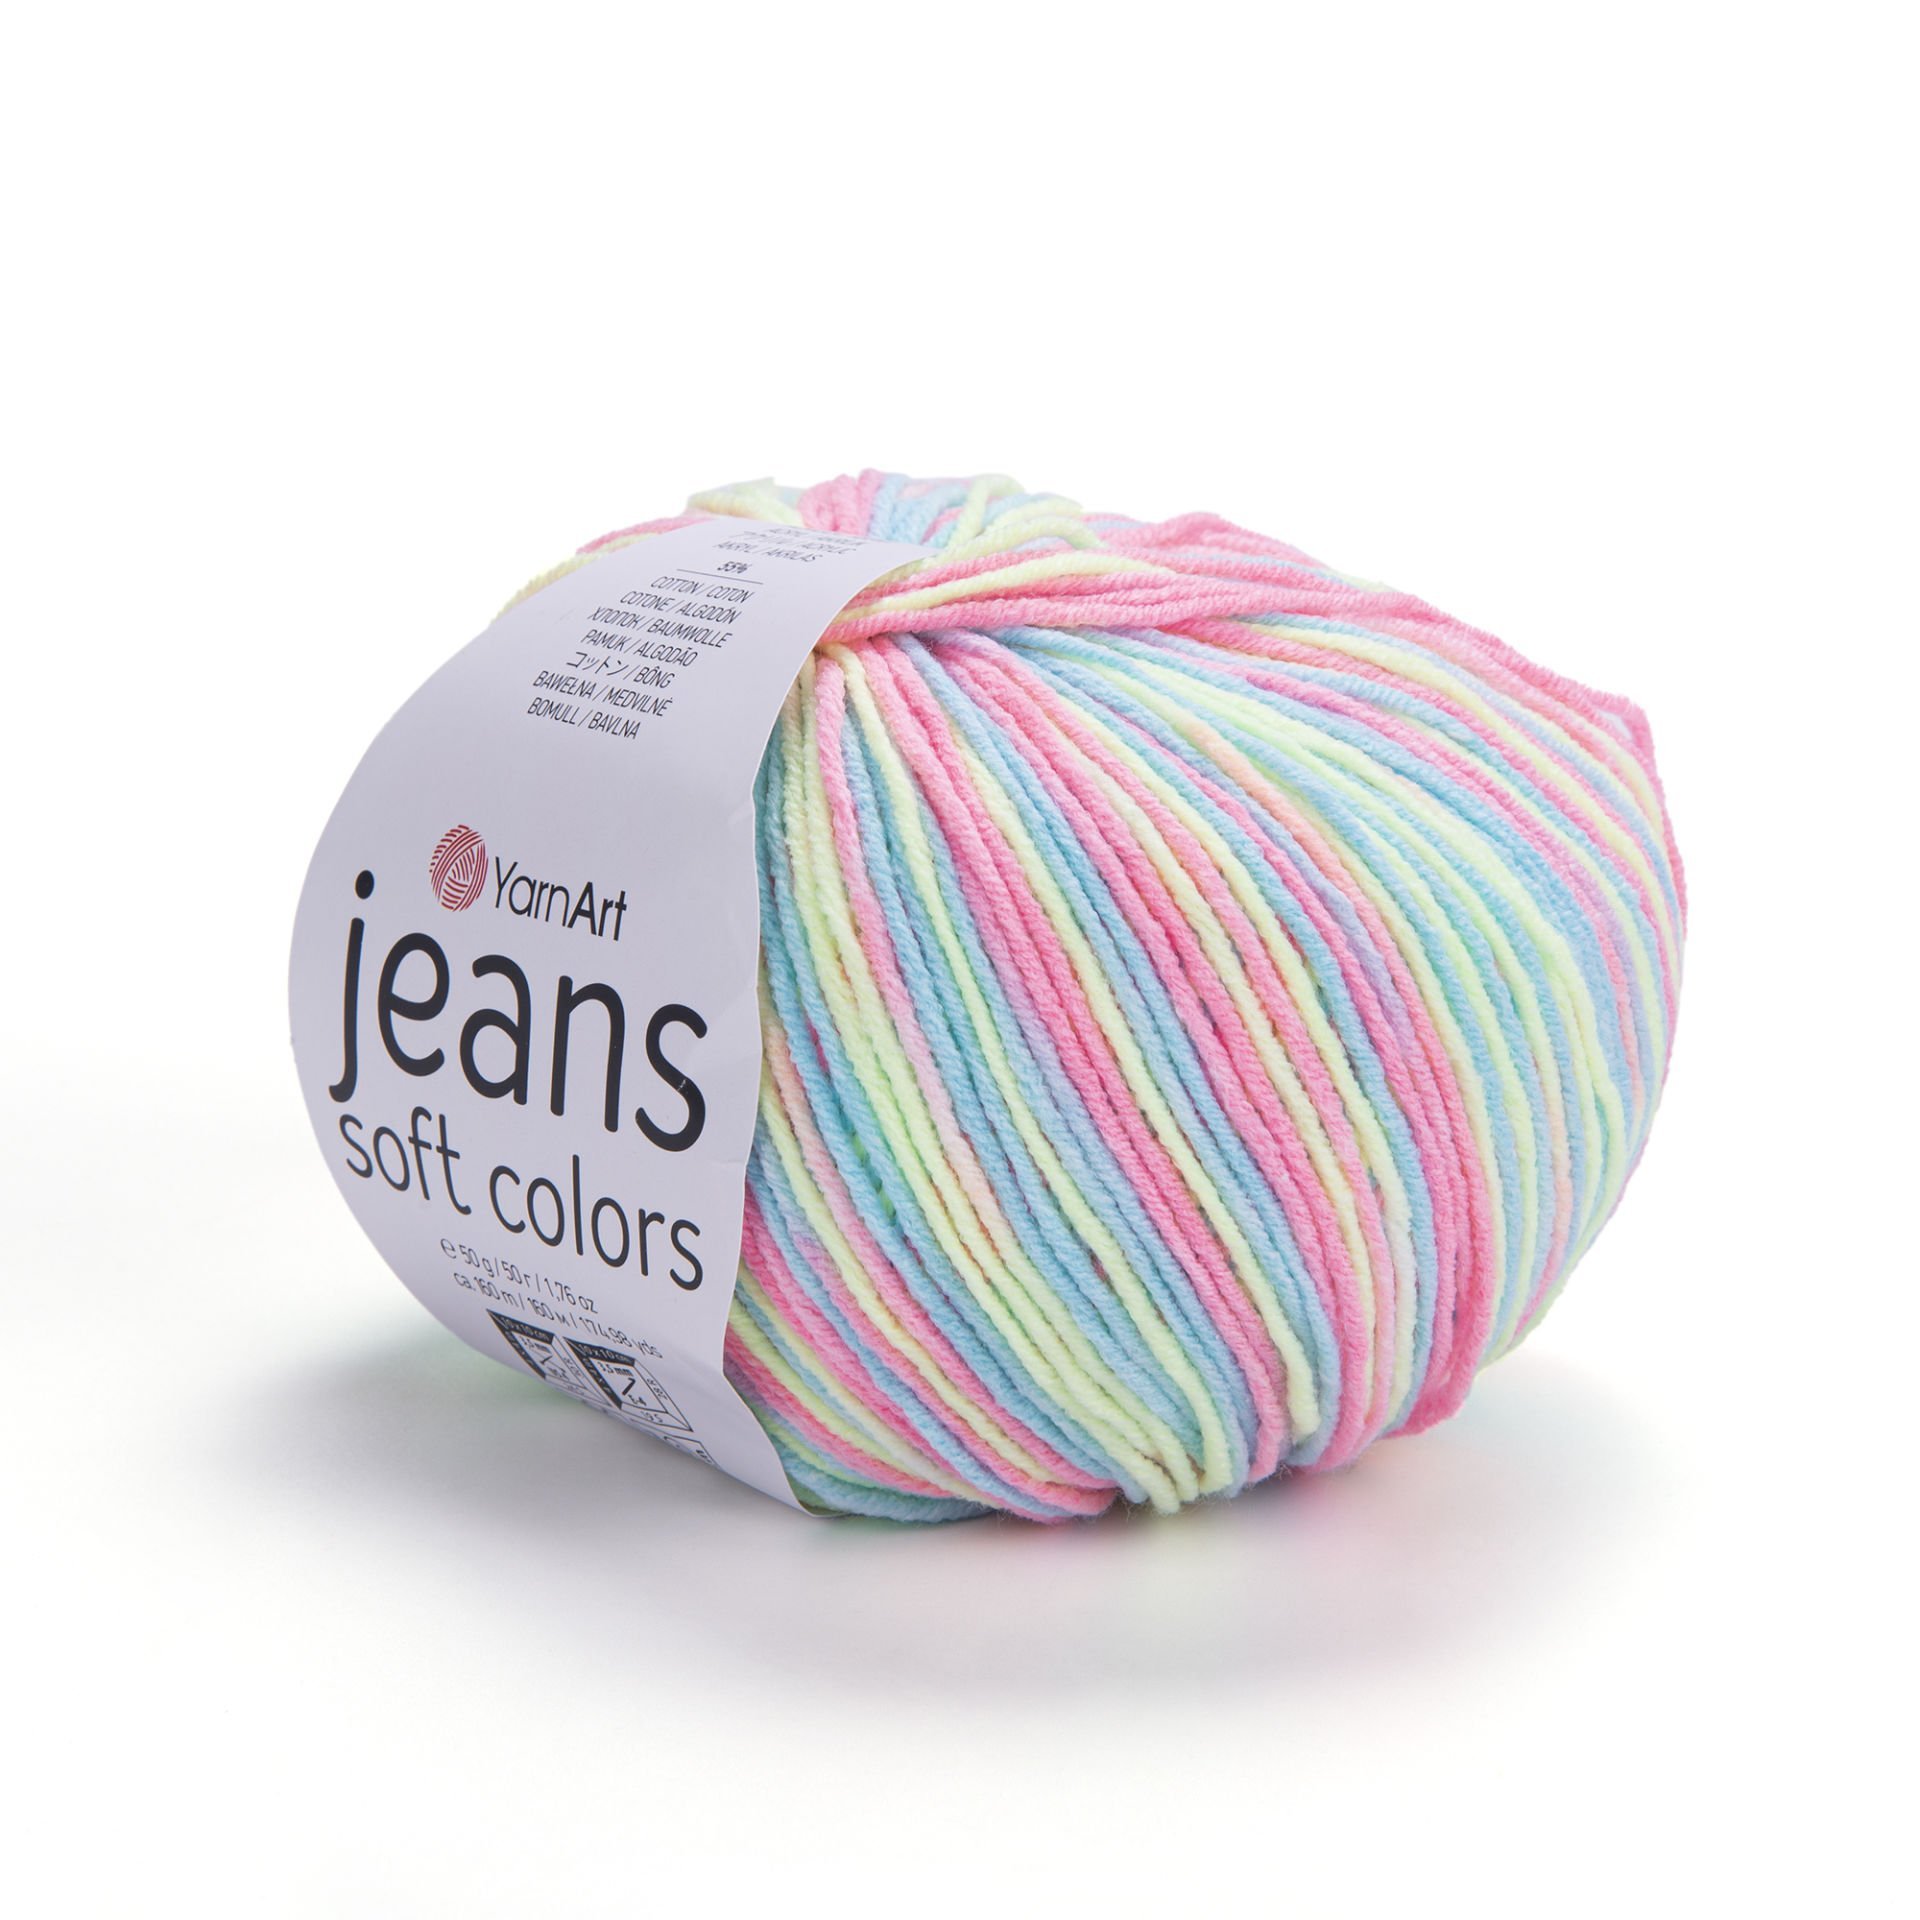 Yarn Art Jeans,sport Weight Yarn,amigurumi Yarn,baby Yarn, Toys